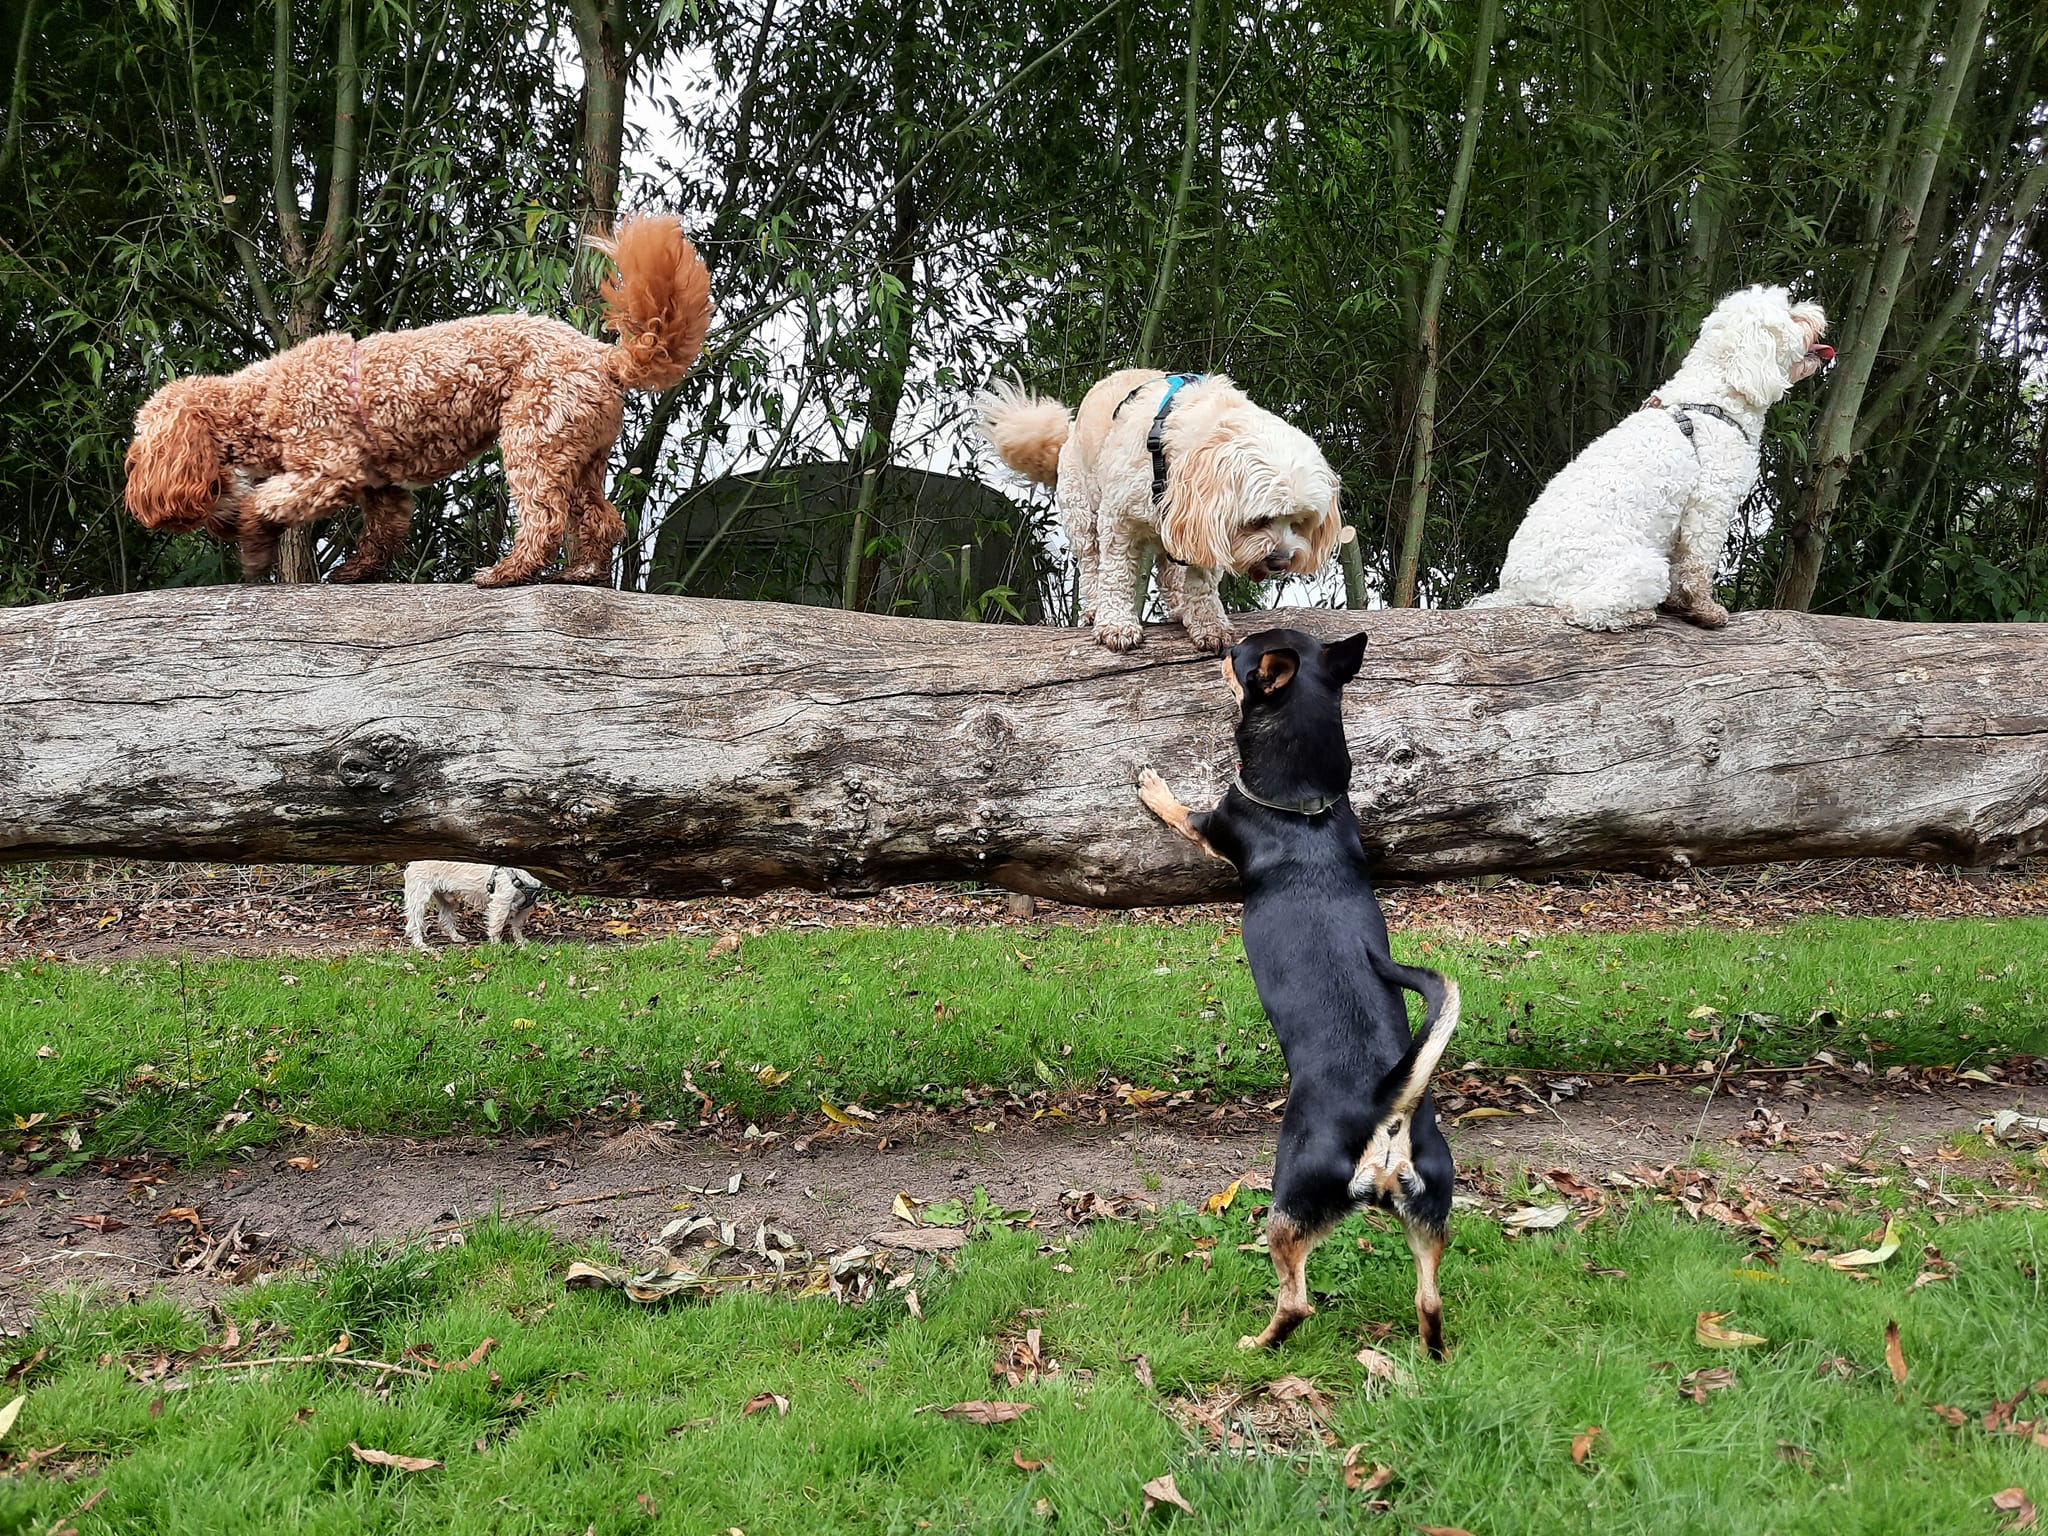 Balance beam - Adventure park for dogs